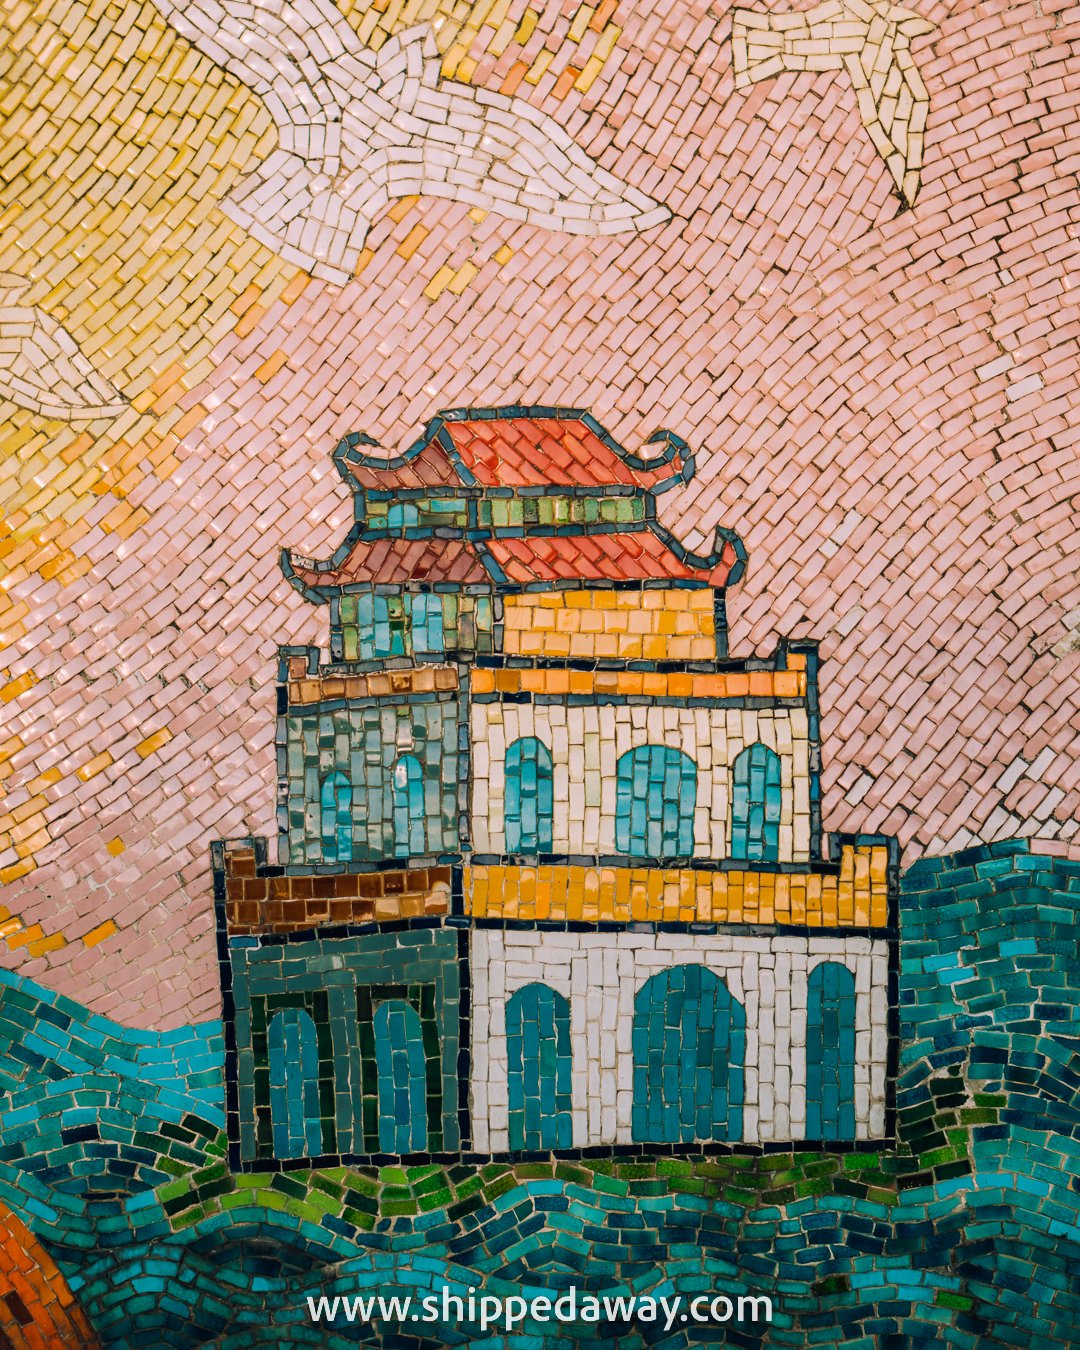 Turtle tower seen on the Ceramic Mosaic Mural in Hanoi, Vietnam